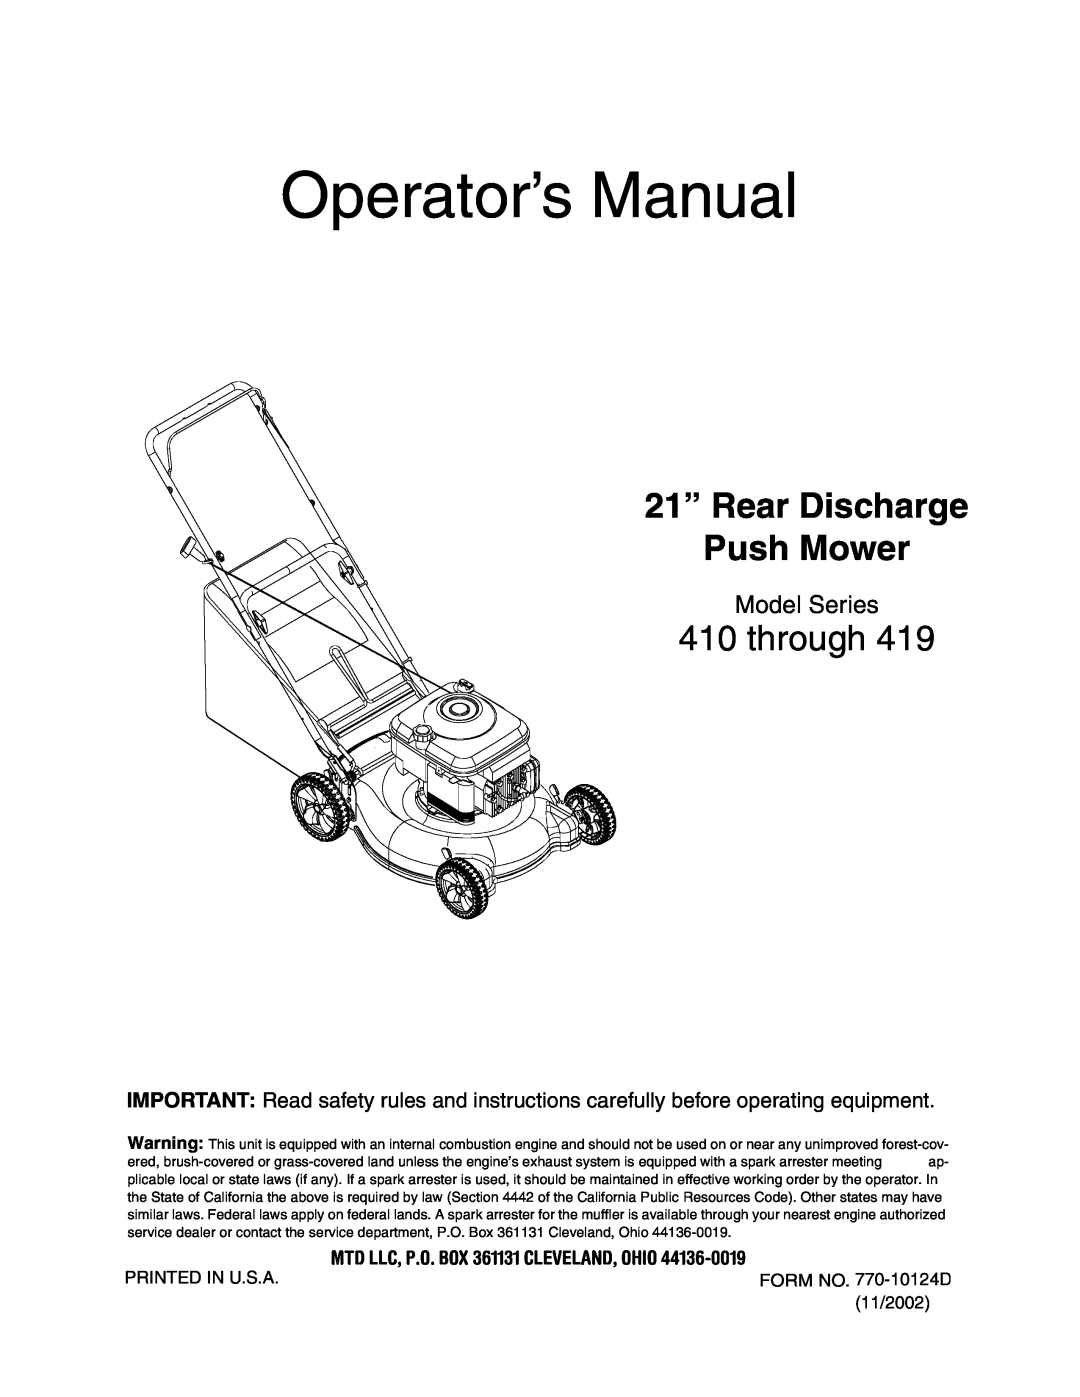 MTD 410 through 419 manual Operator’s Manual, 21” Rear Discharge Push Mower, Model Series 